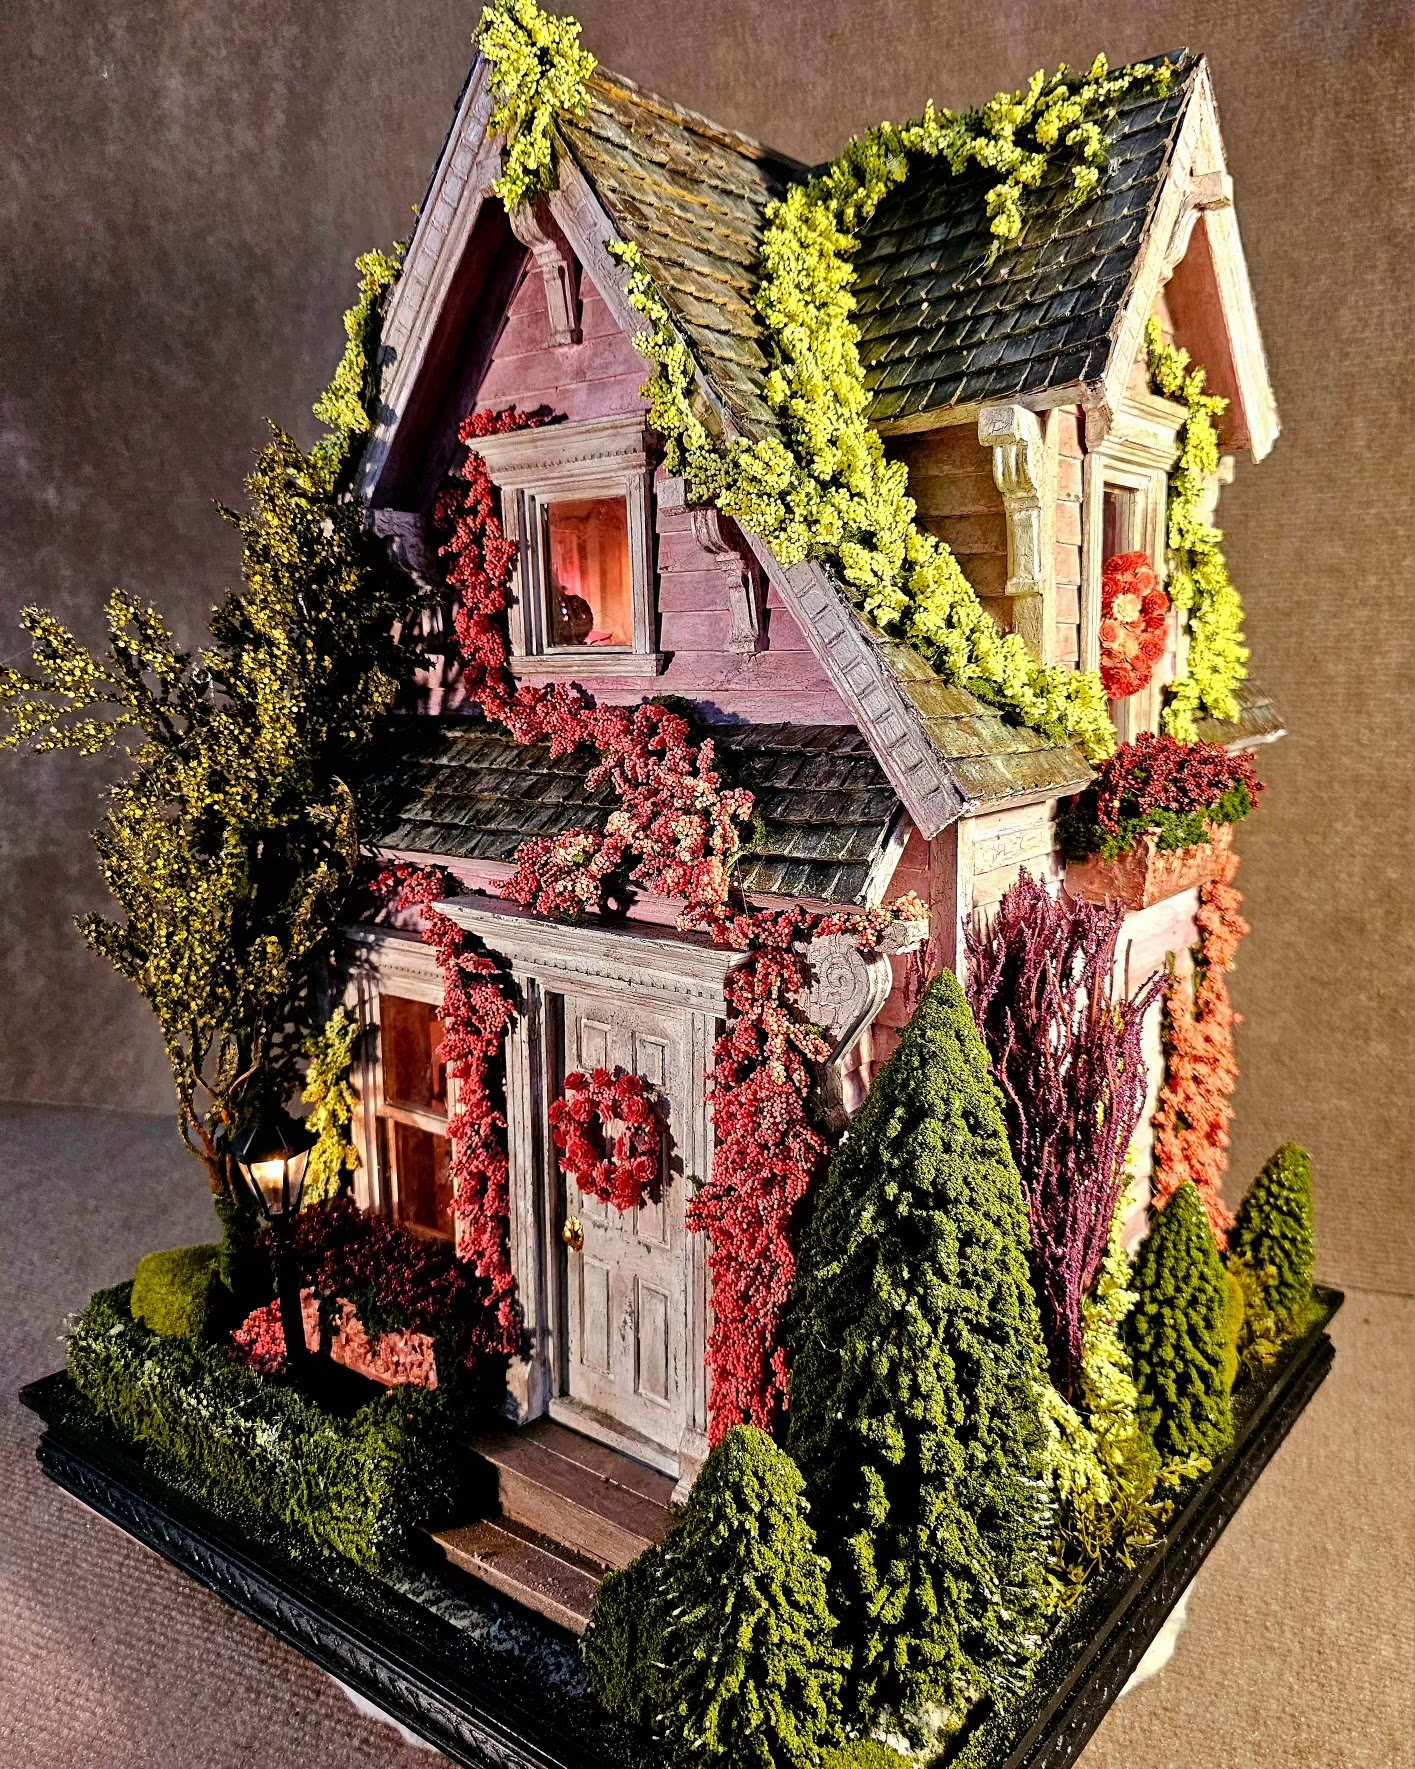 Miniature Dollhouse 1:12  Miniature Dollhouse Farmhouse Stanley